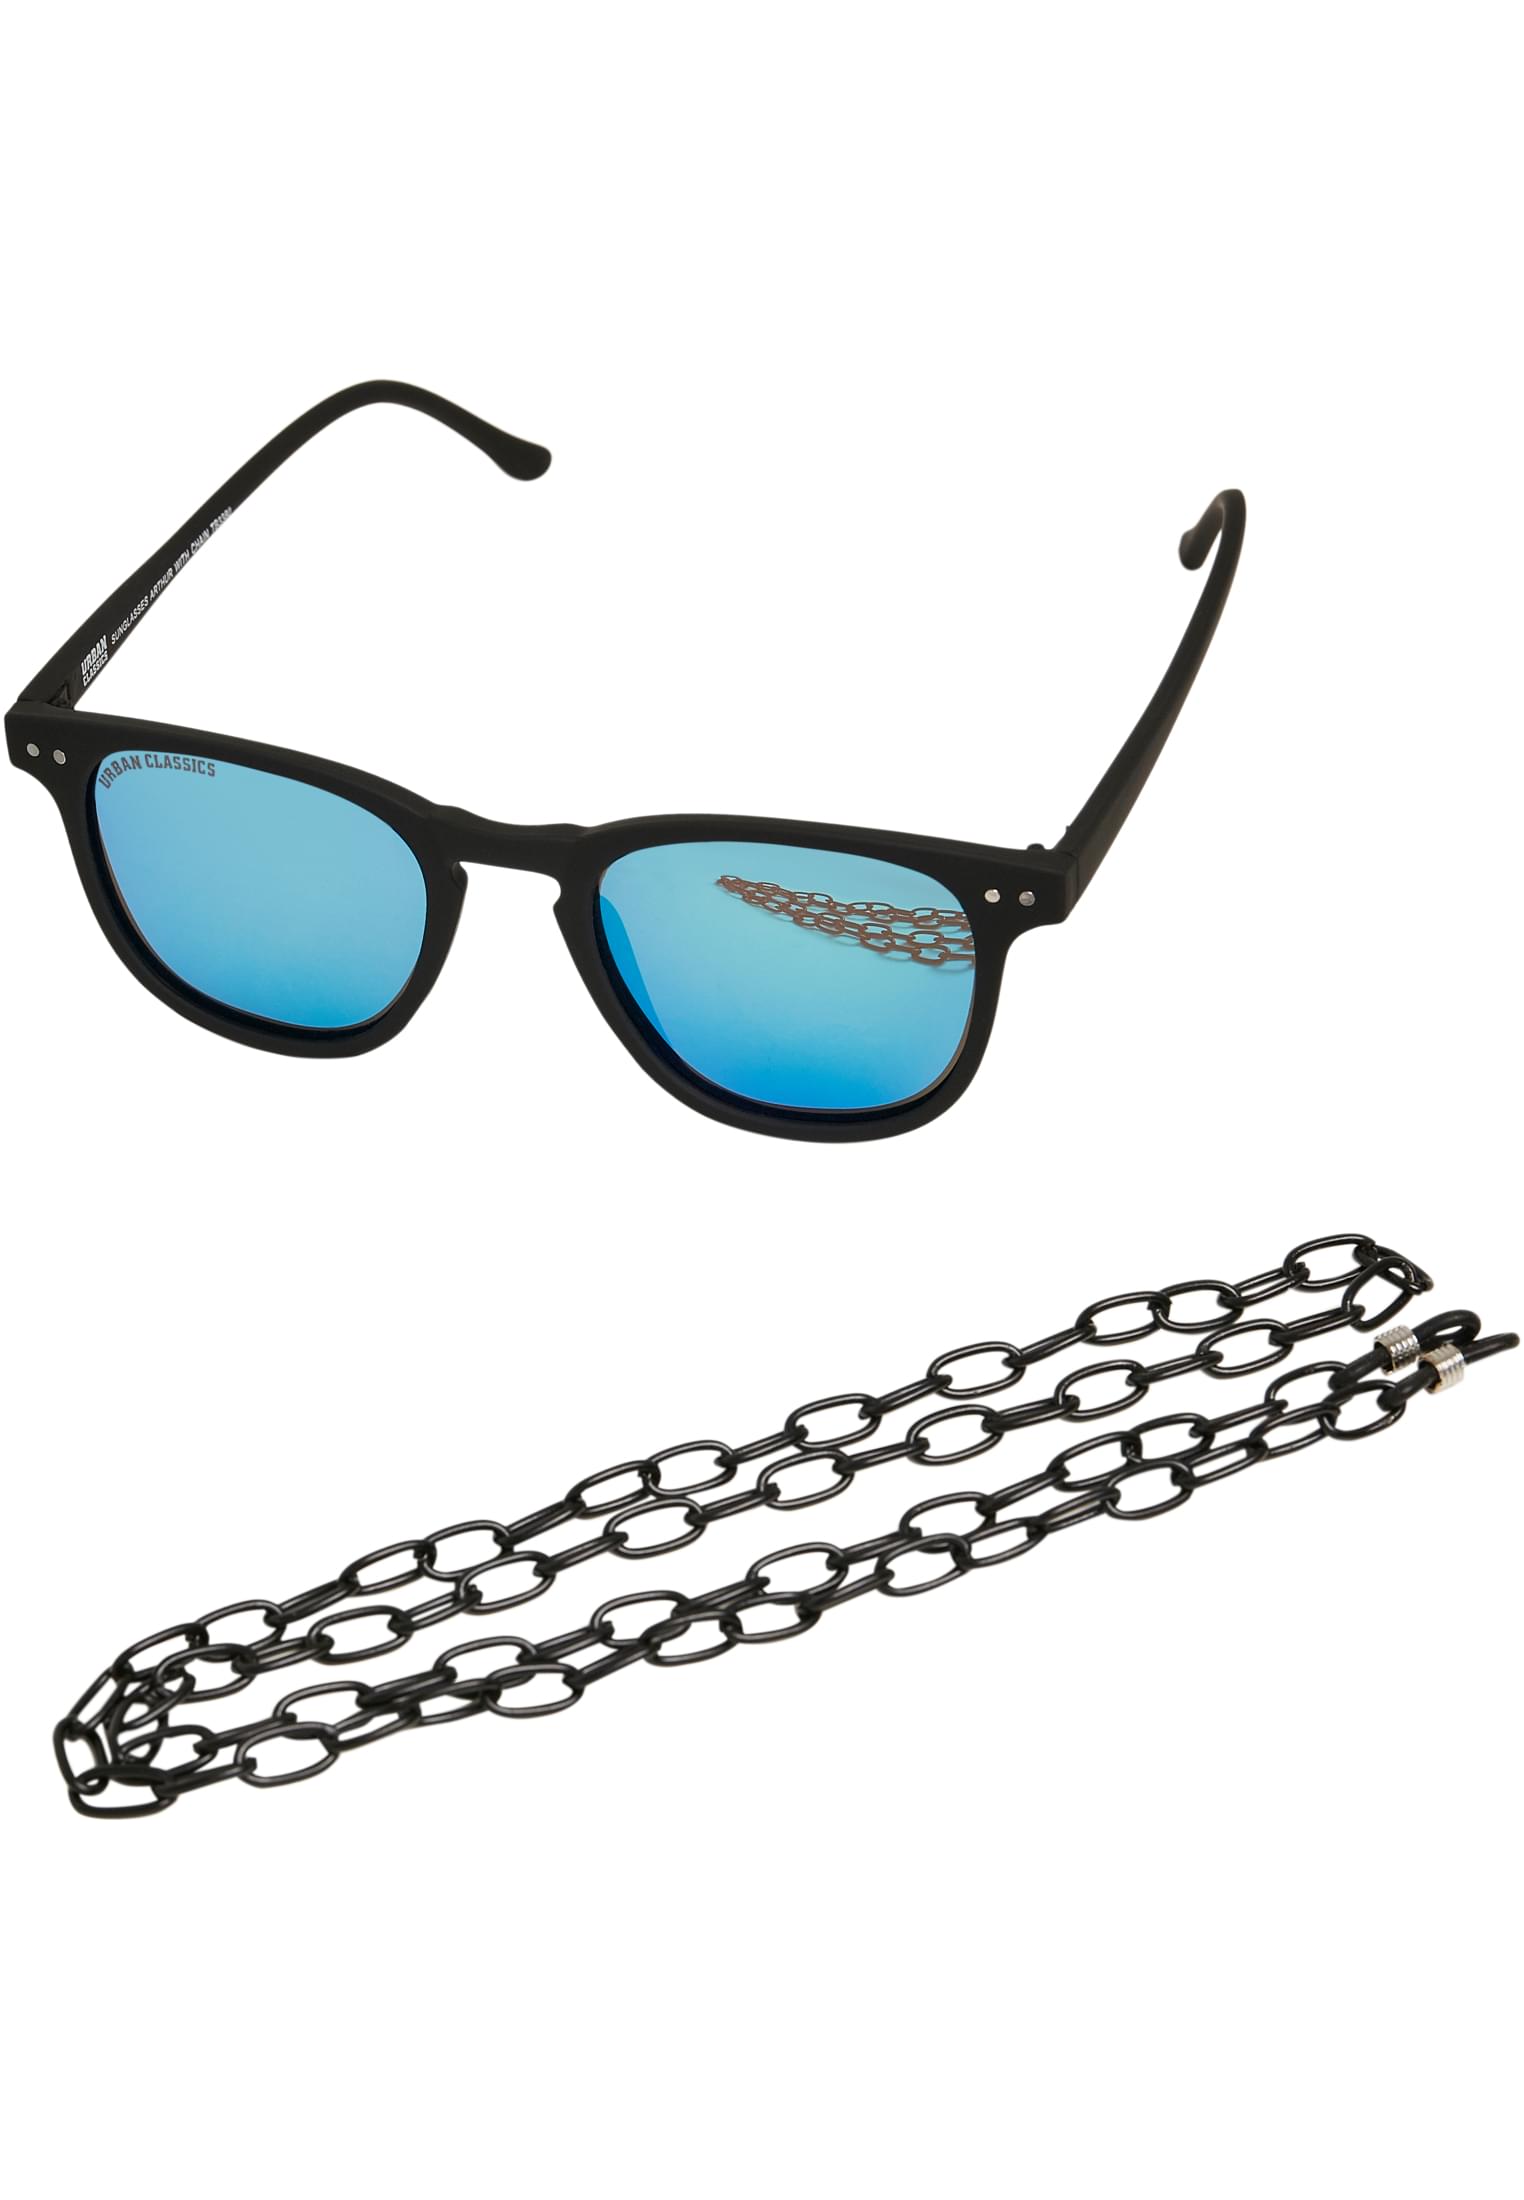 Arthur Chain-TB3380 Sunglasses with